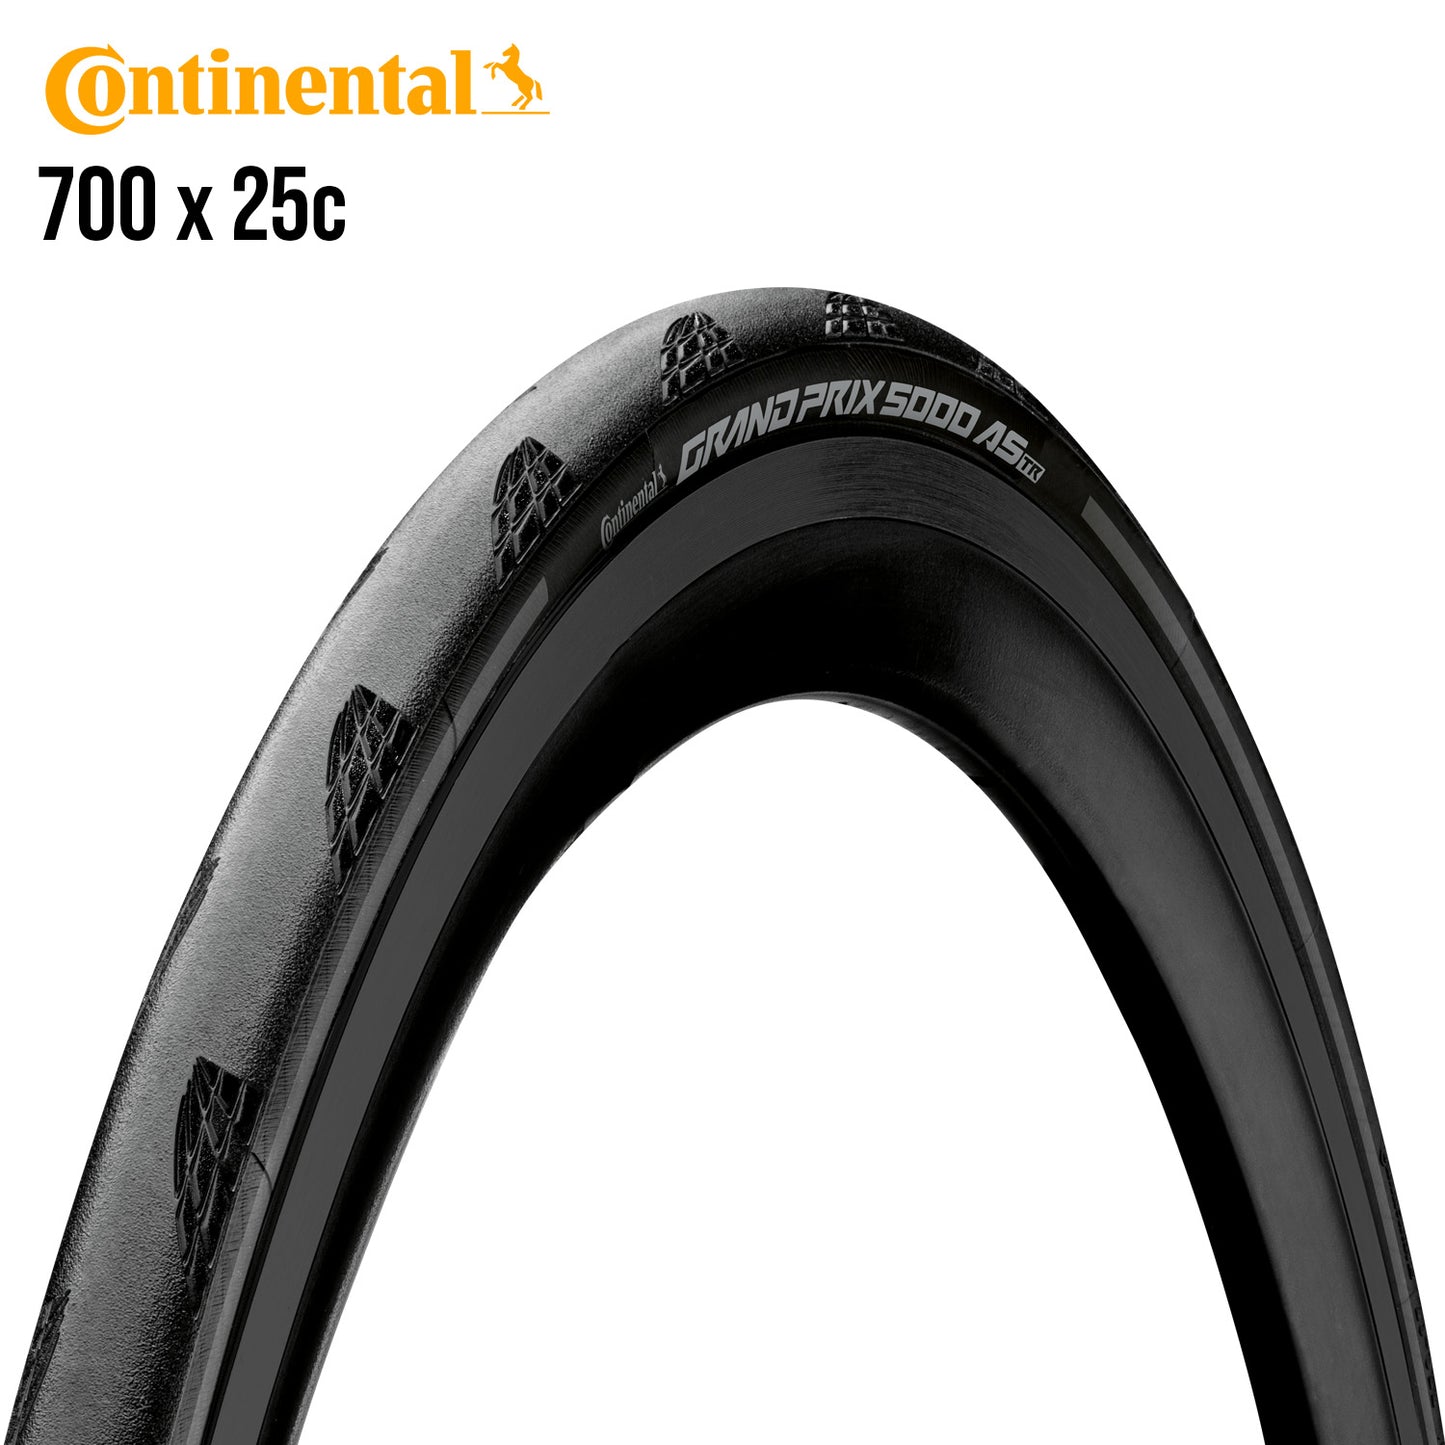 Continental Grand Prix 5000 (GP5000) AS TR All-Season Road Bike Tire Tubeless Ready - Black